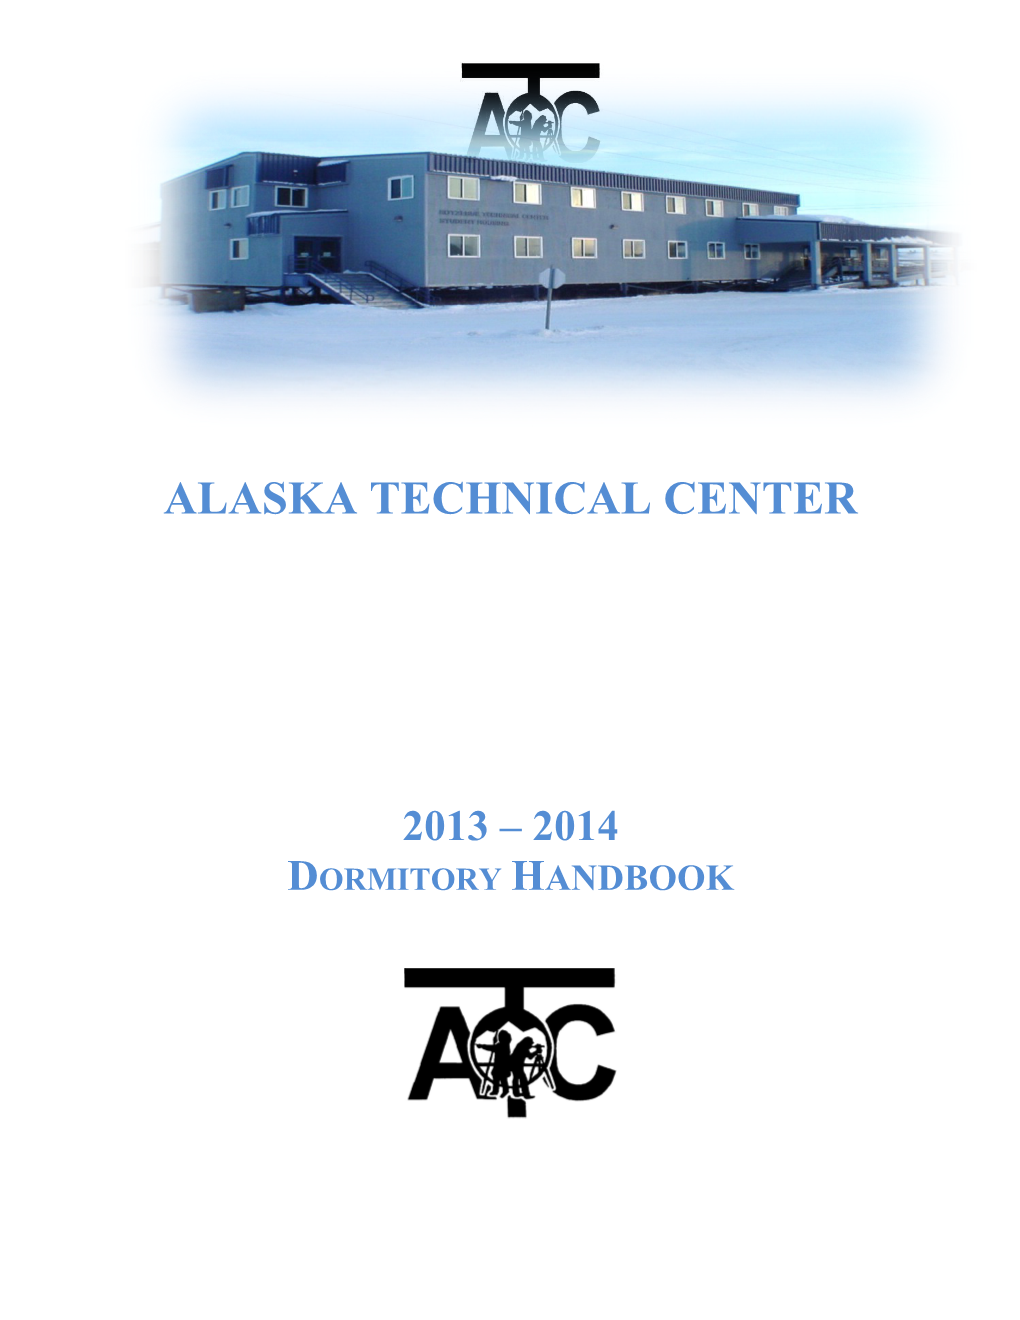 Alaska Technical Center